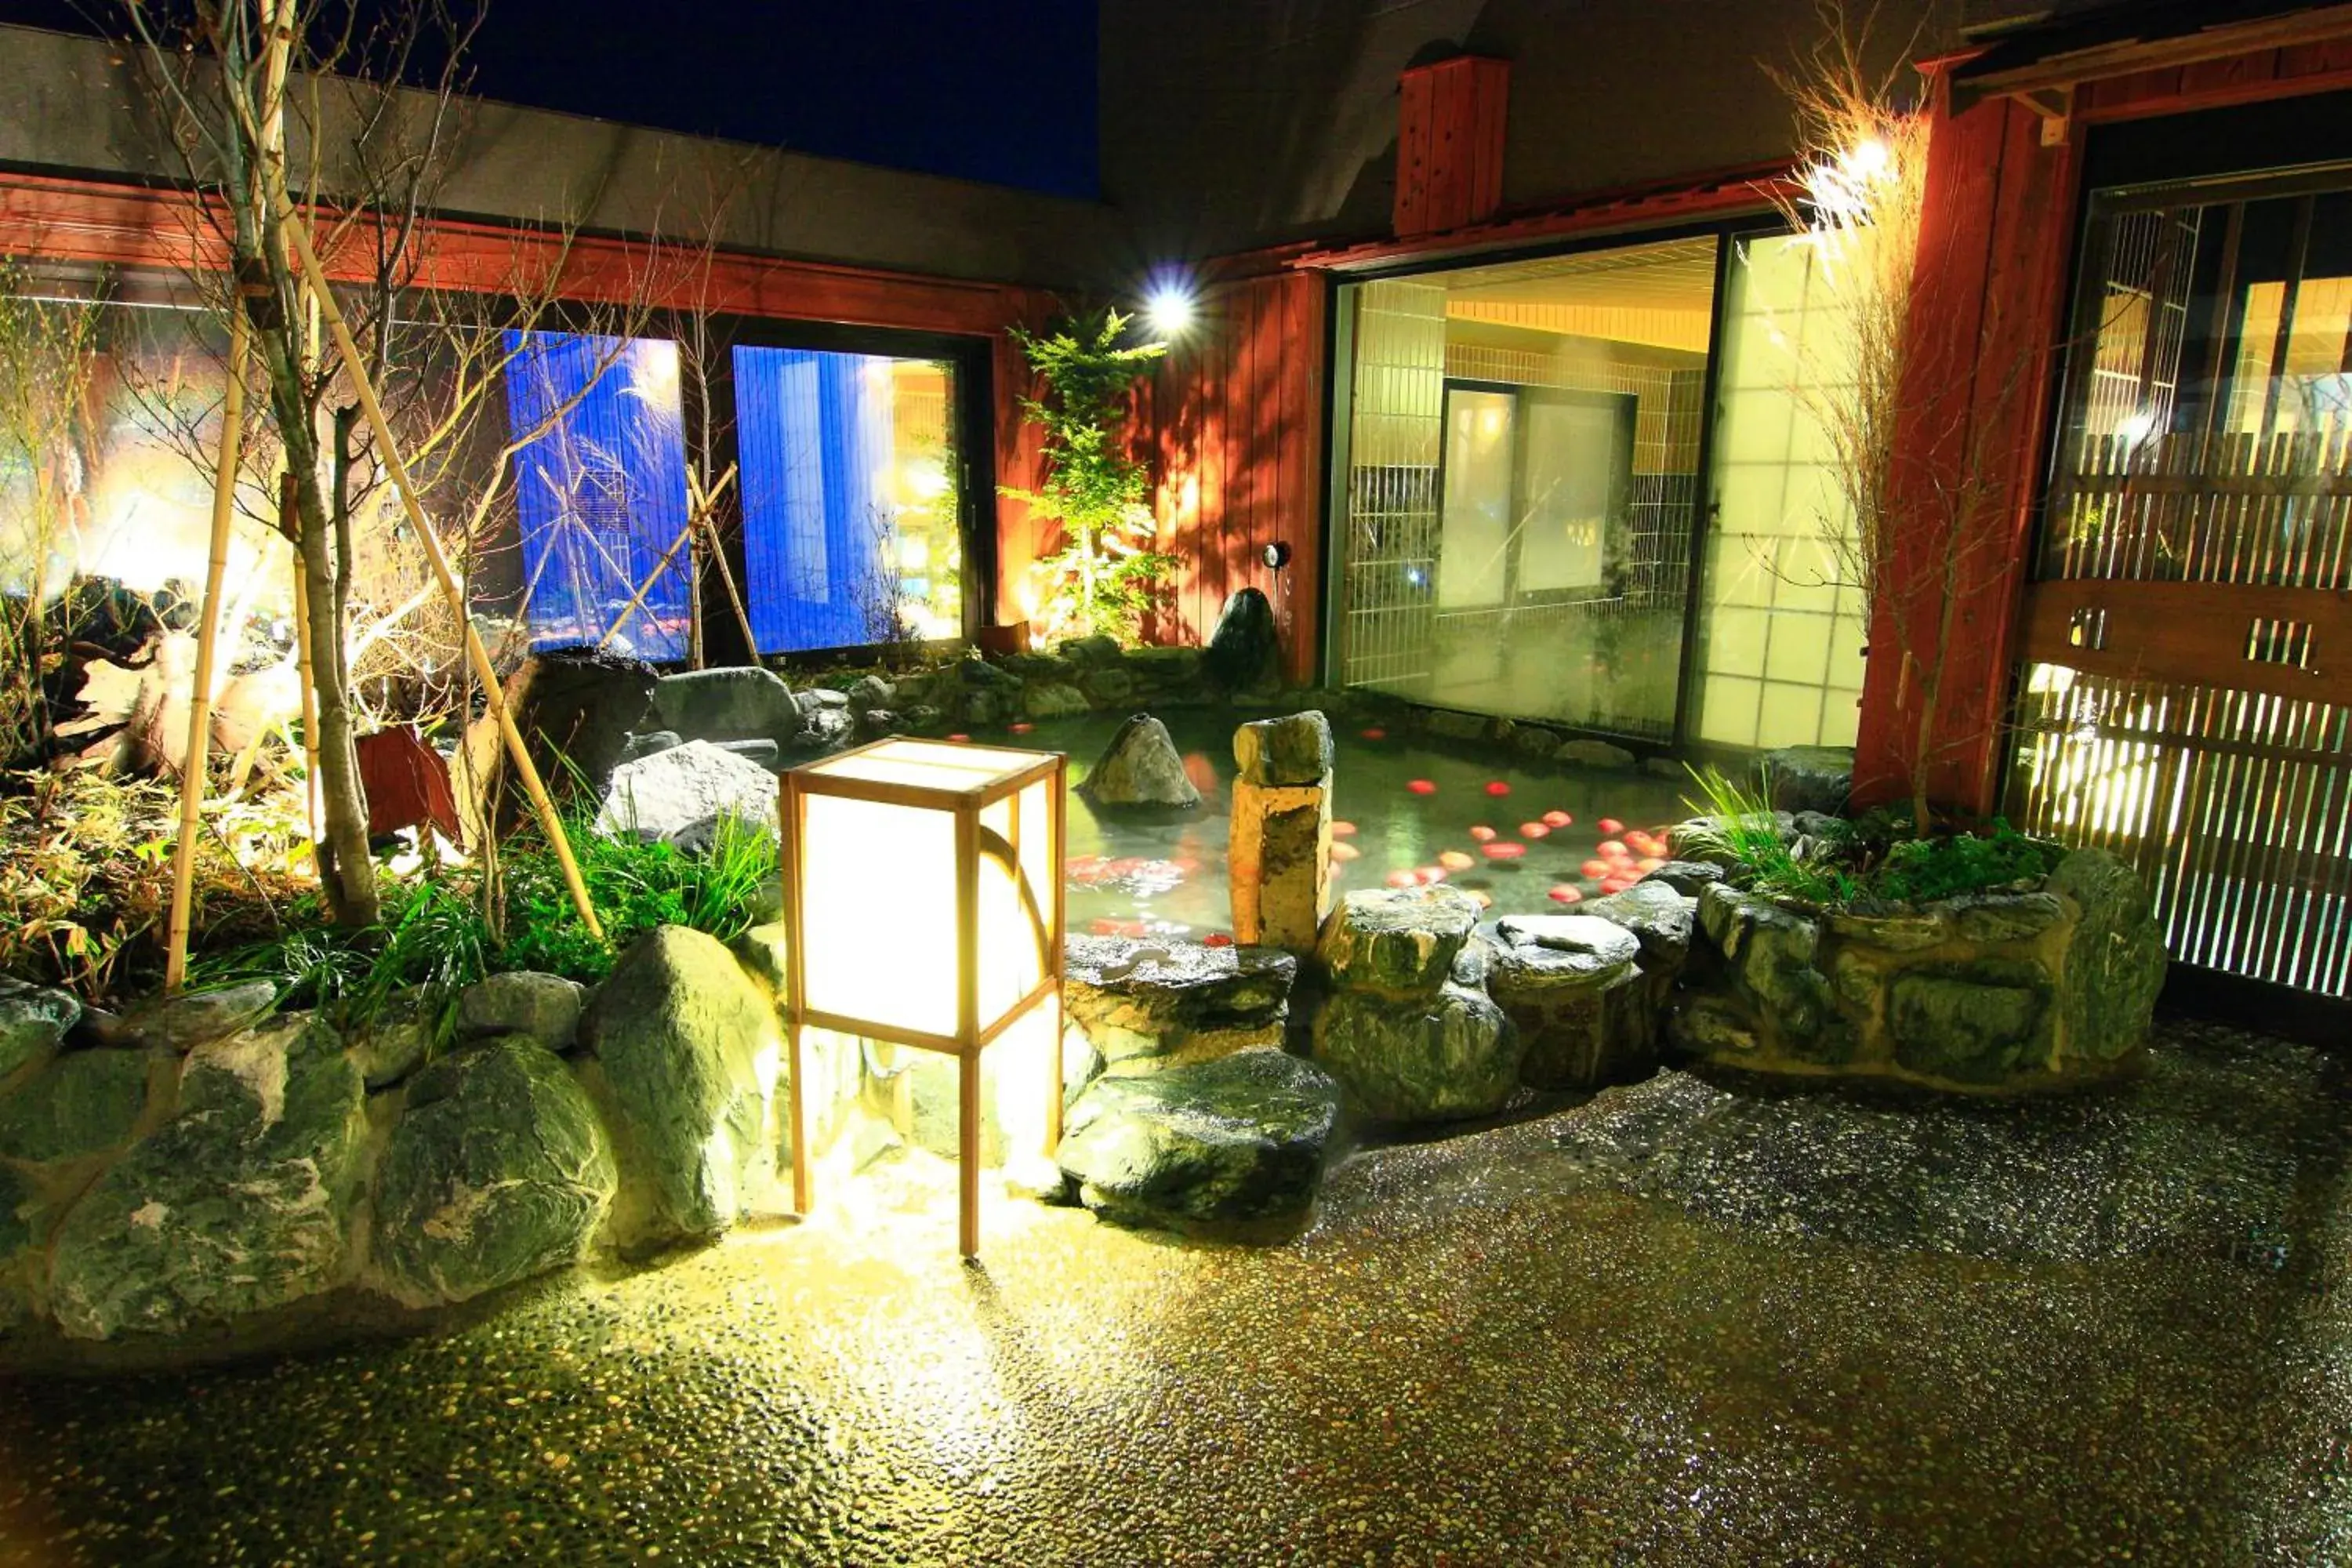 Hot Spring Bath in Dormy Inn Hirosaki Natural Hot Spring